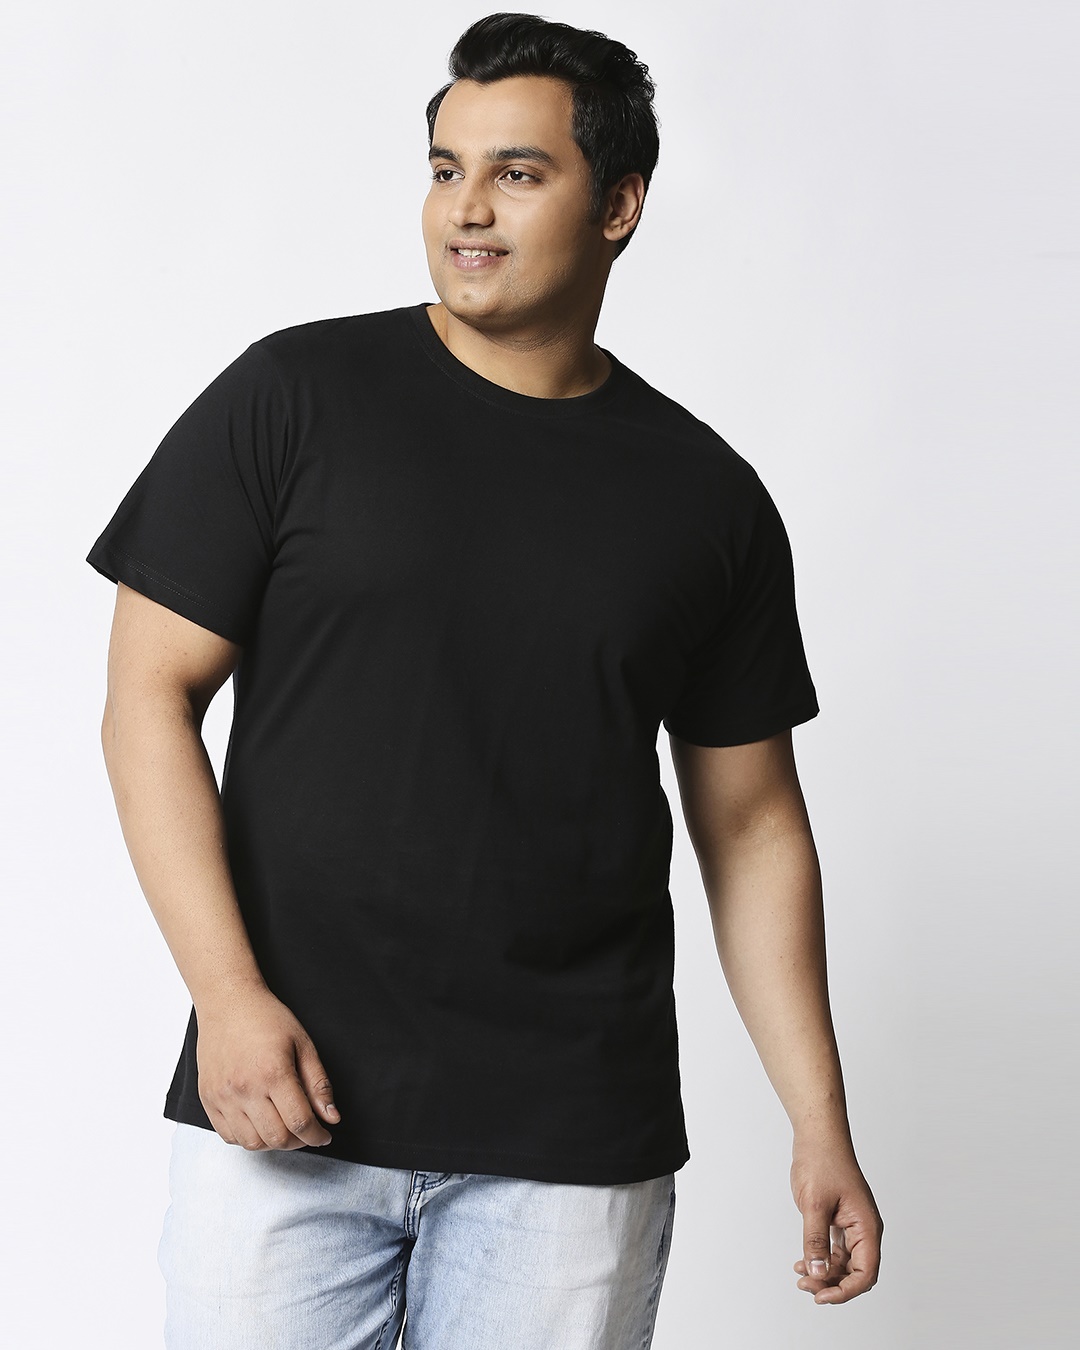 plain black t shirt plus size